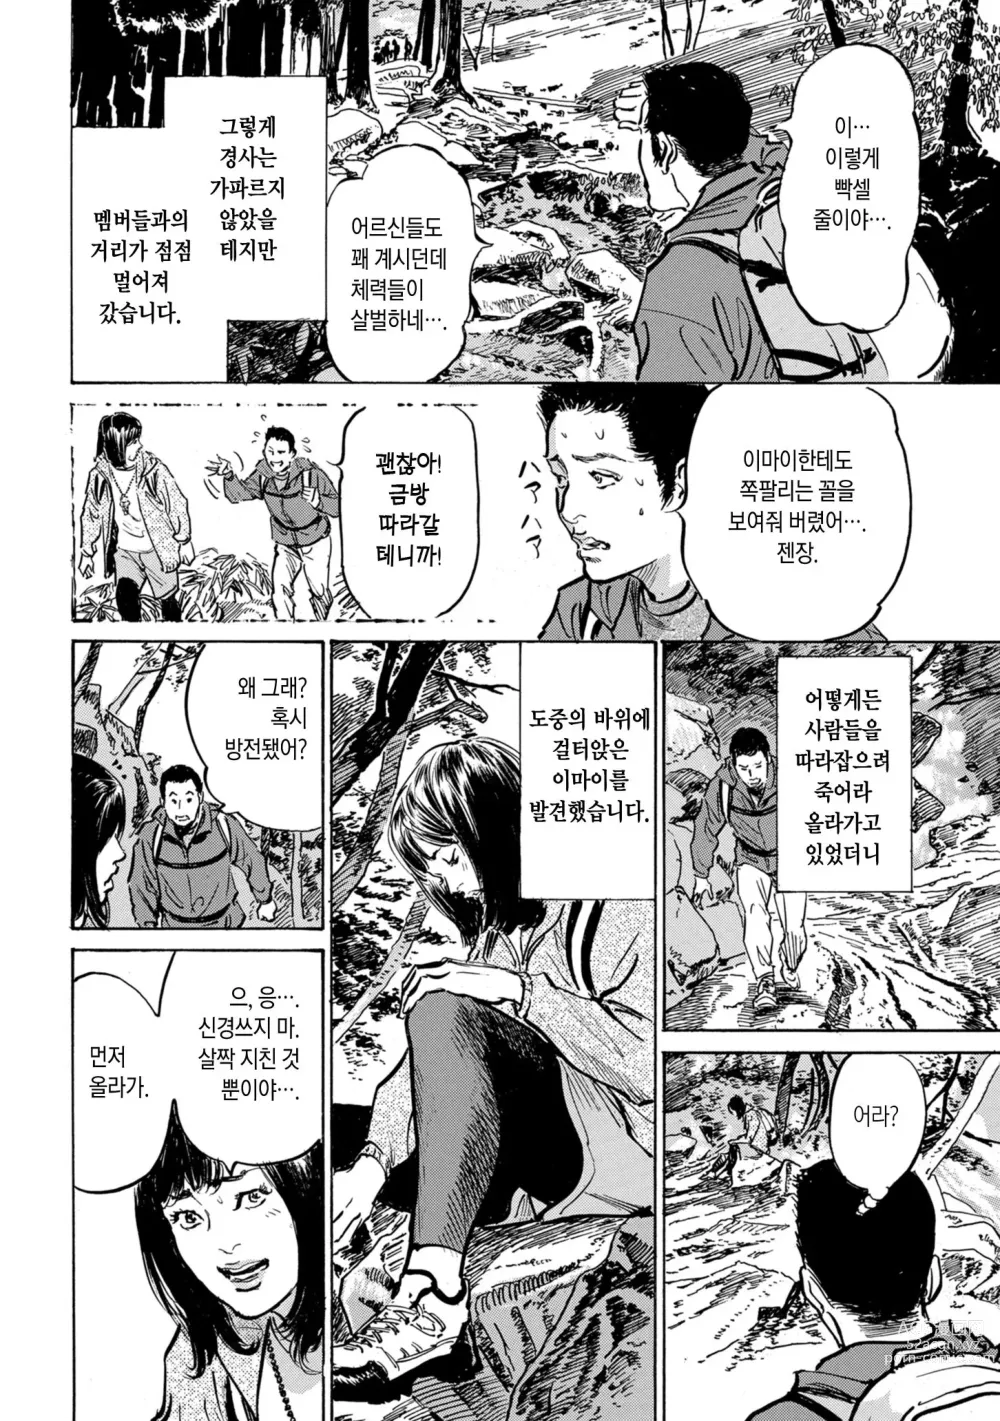 Page 4 of manga  제6화 트레킹 해프닝